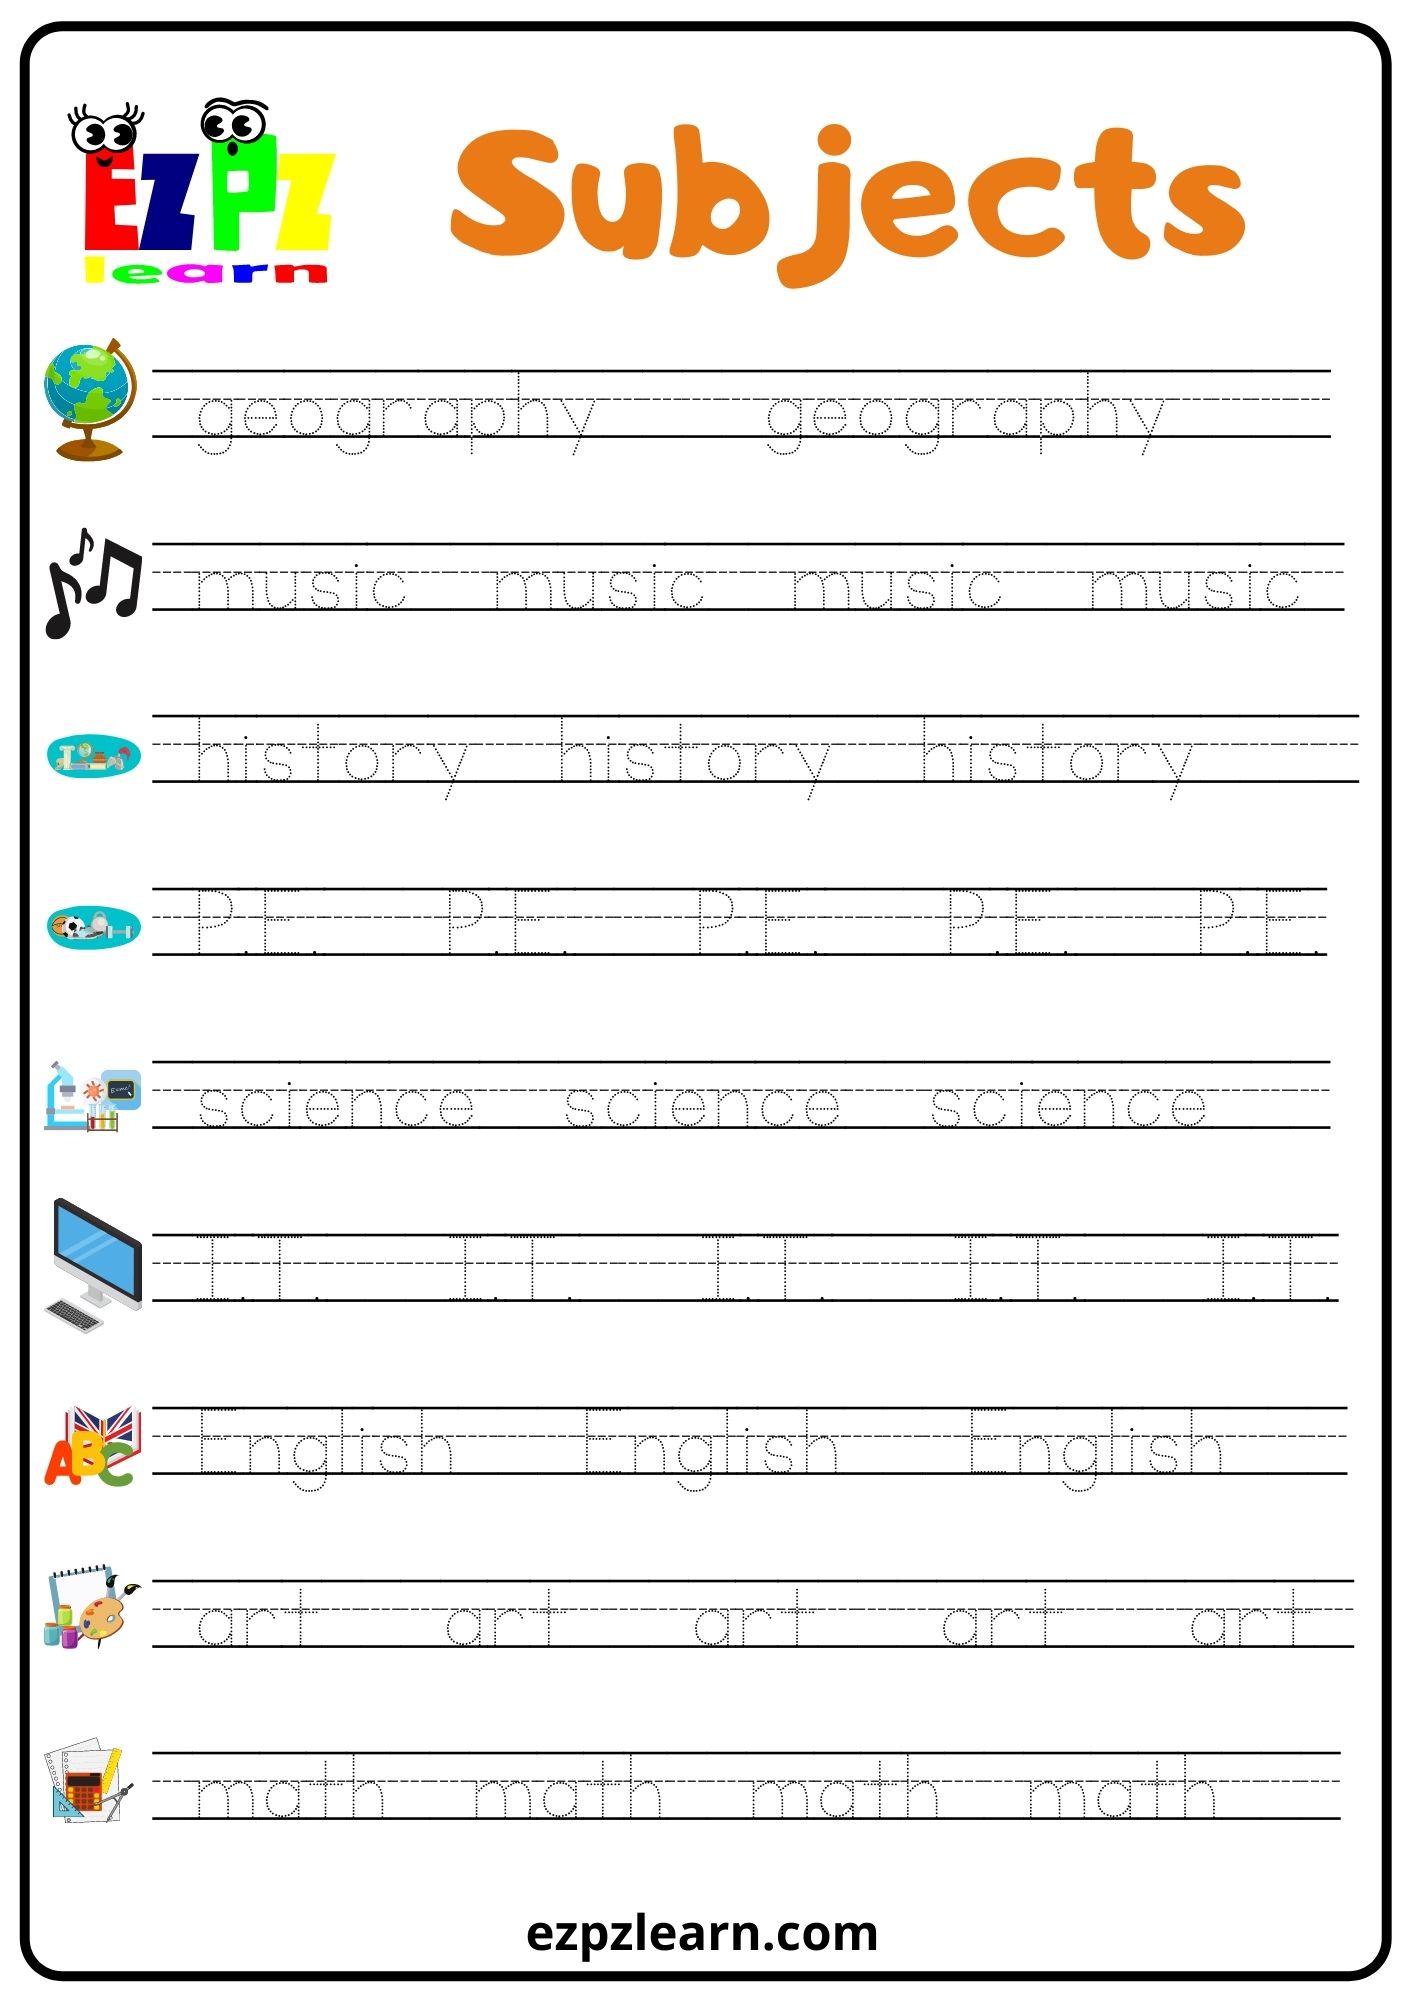 subjects school word tracing worksheet ezpzlearn com